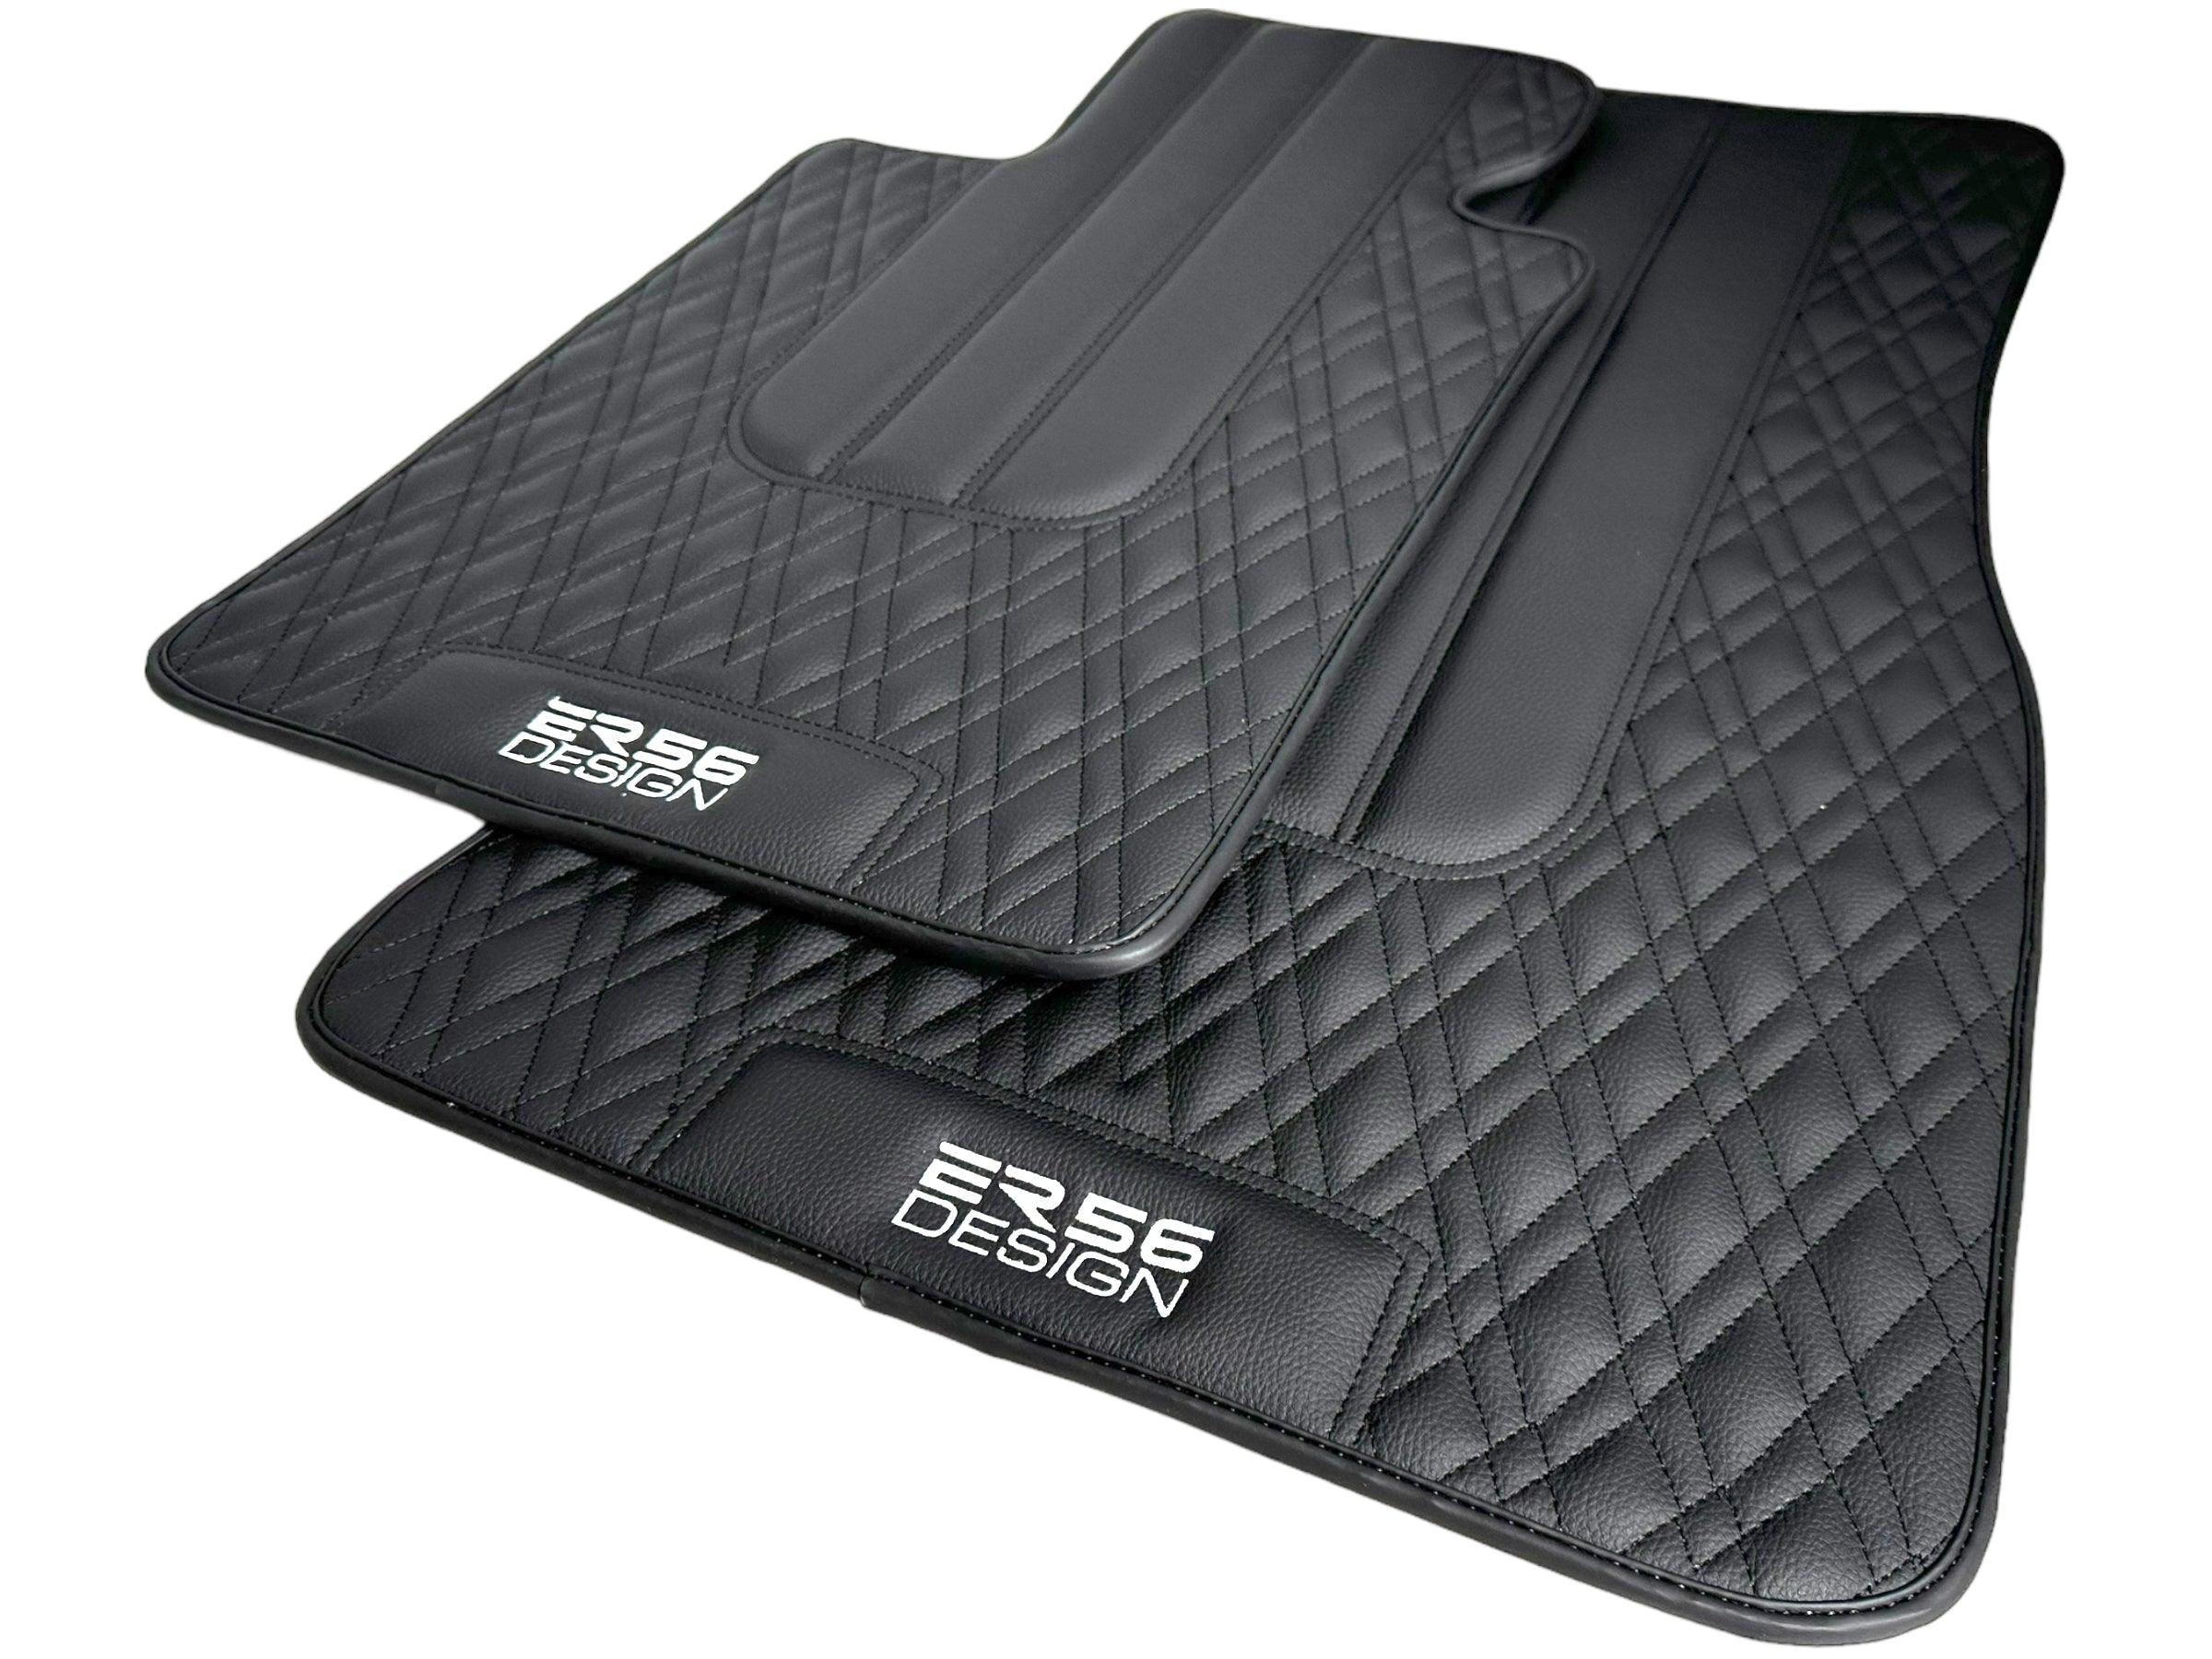 Floor Mats For BMW 5 Series E61 Wagon Black Leather Er56 Design - AutoWin